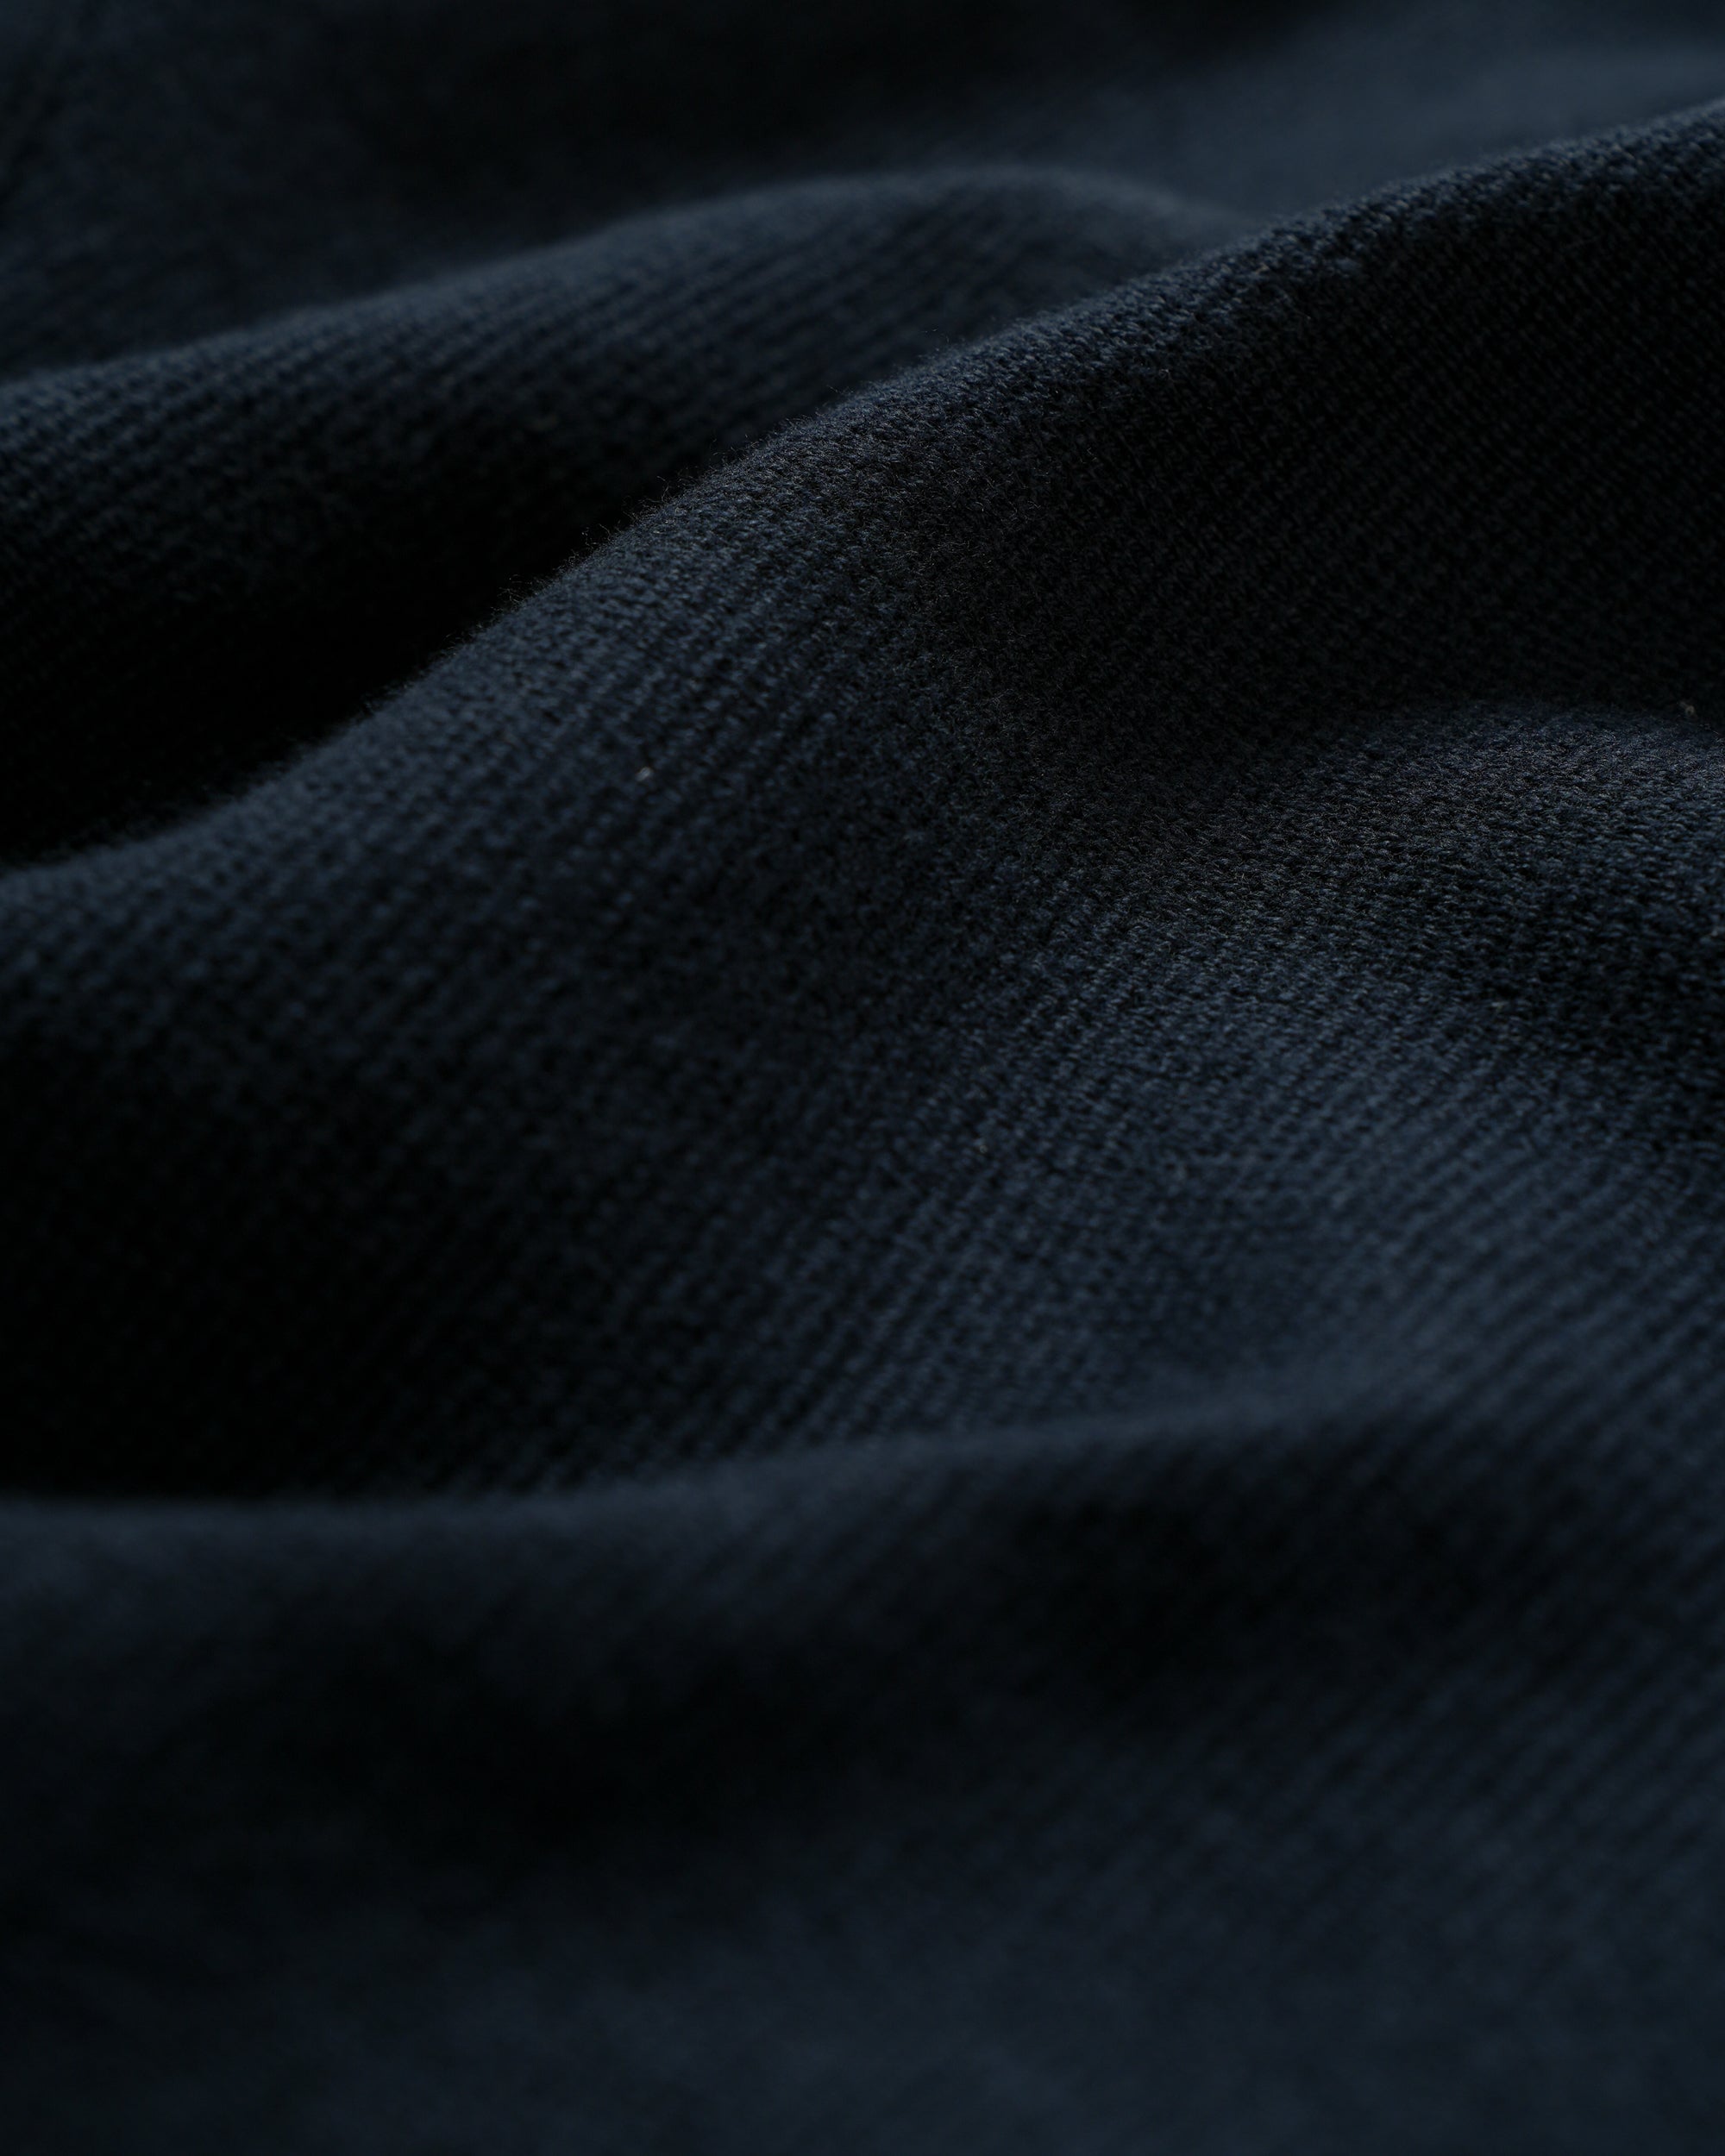 NNY x Arpenteur Utility Knit Jacket - Combed Cotton Milano - Dark Navy